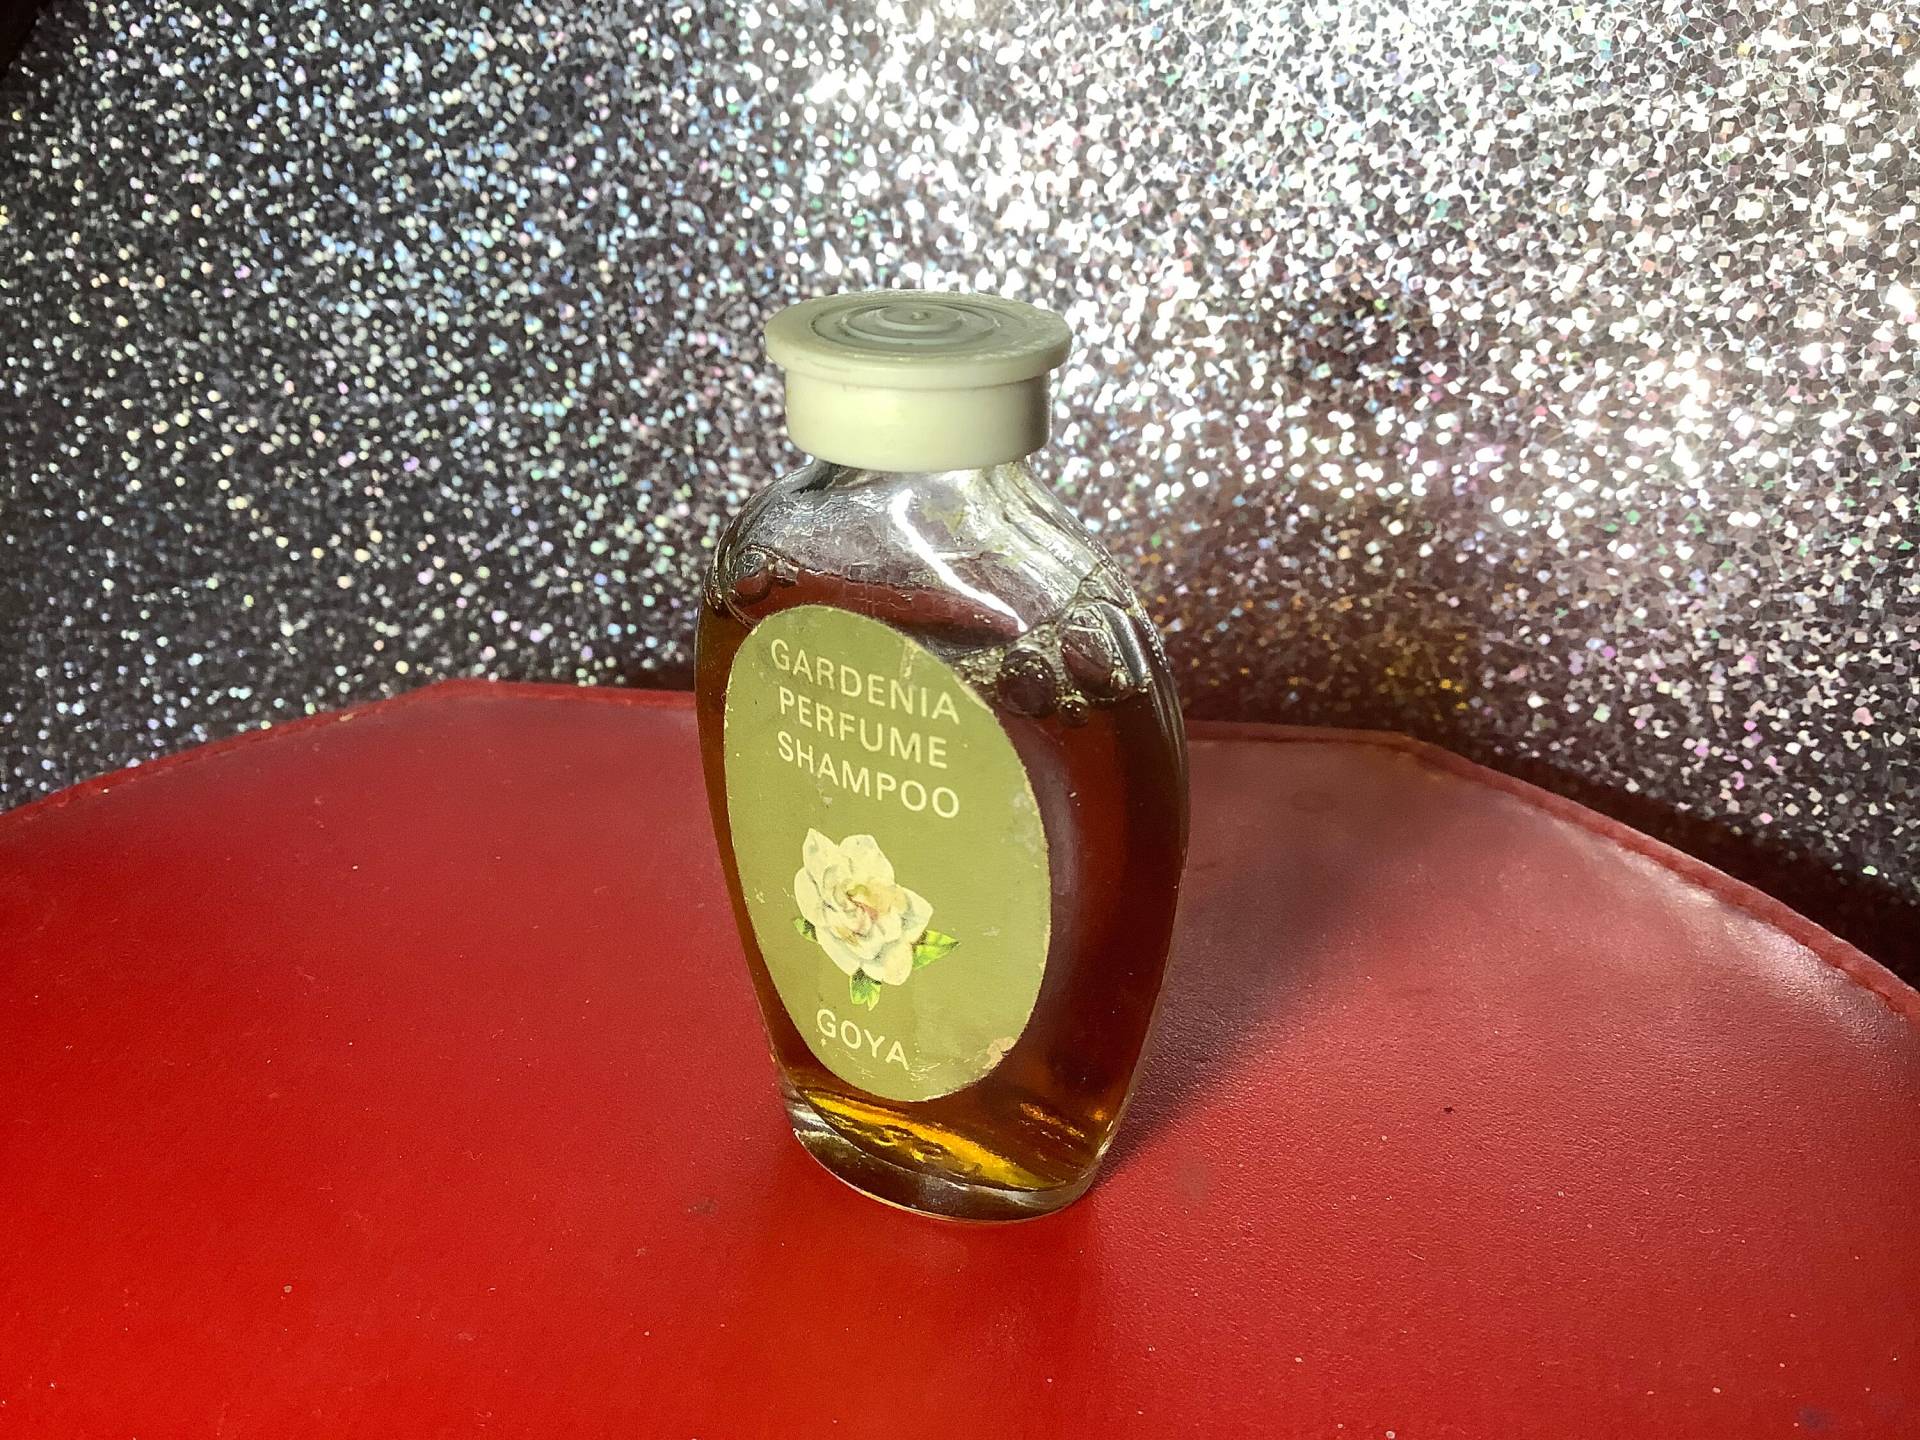 Goya Gardenia Parfum Shampoo von LipstickandPanties